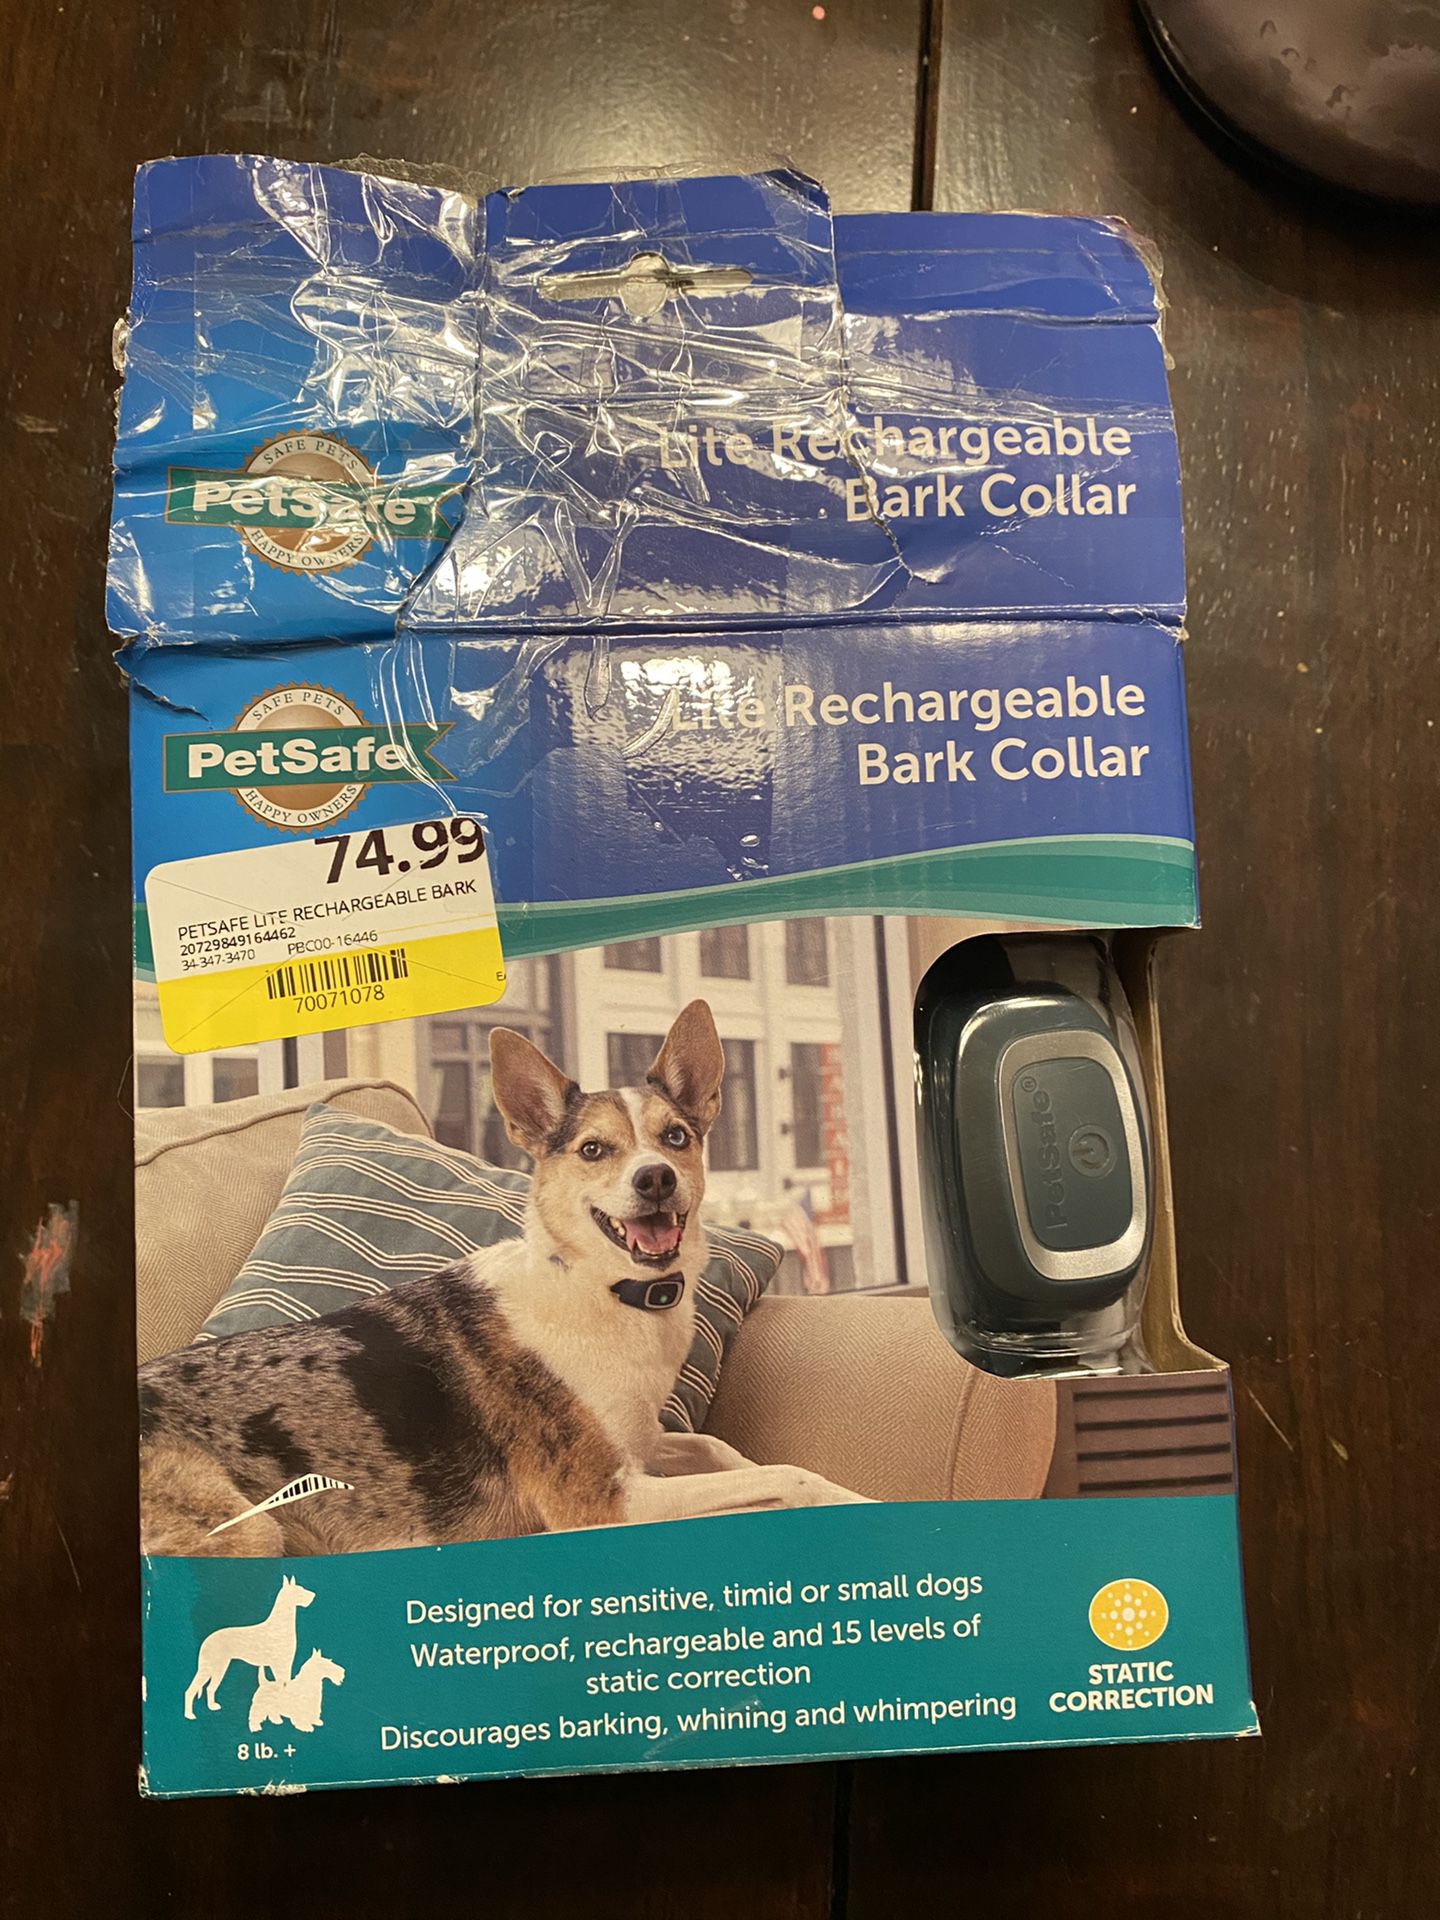 Pet safe rechargeable bark collar